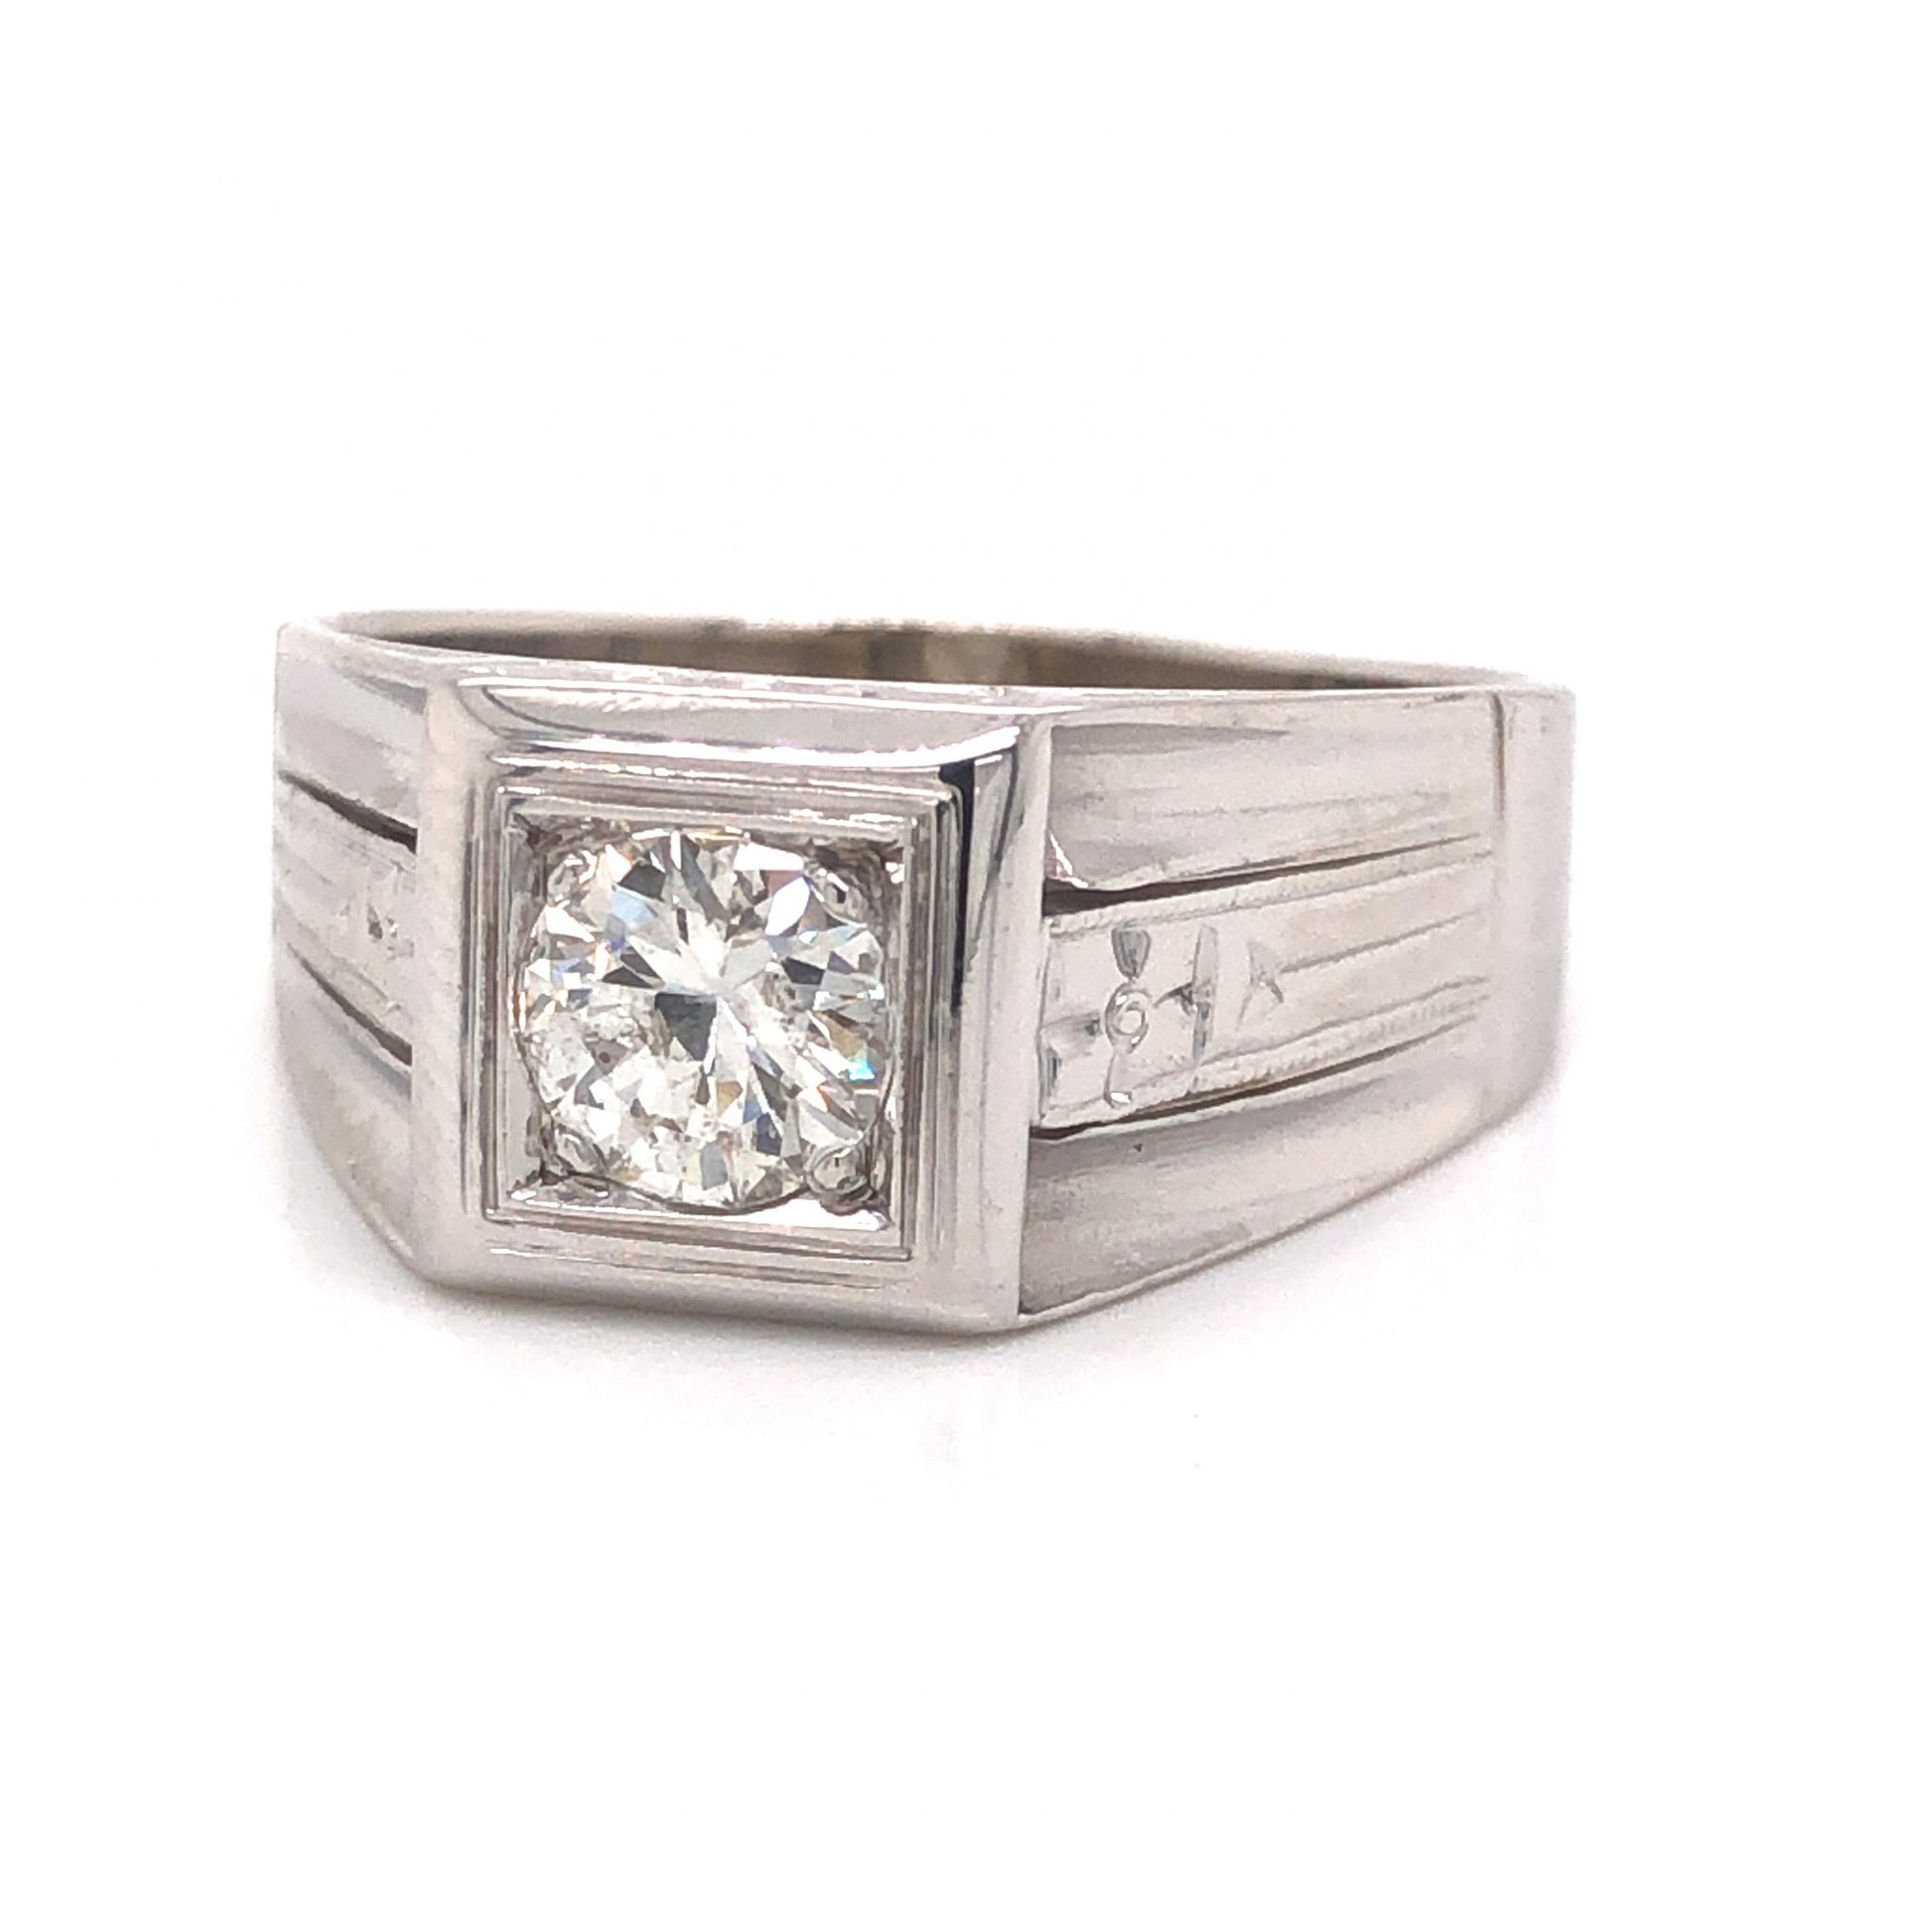 1930's Art Deco Men's Diamond Ring in 14k White Gold